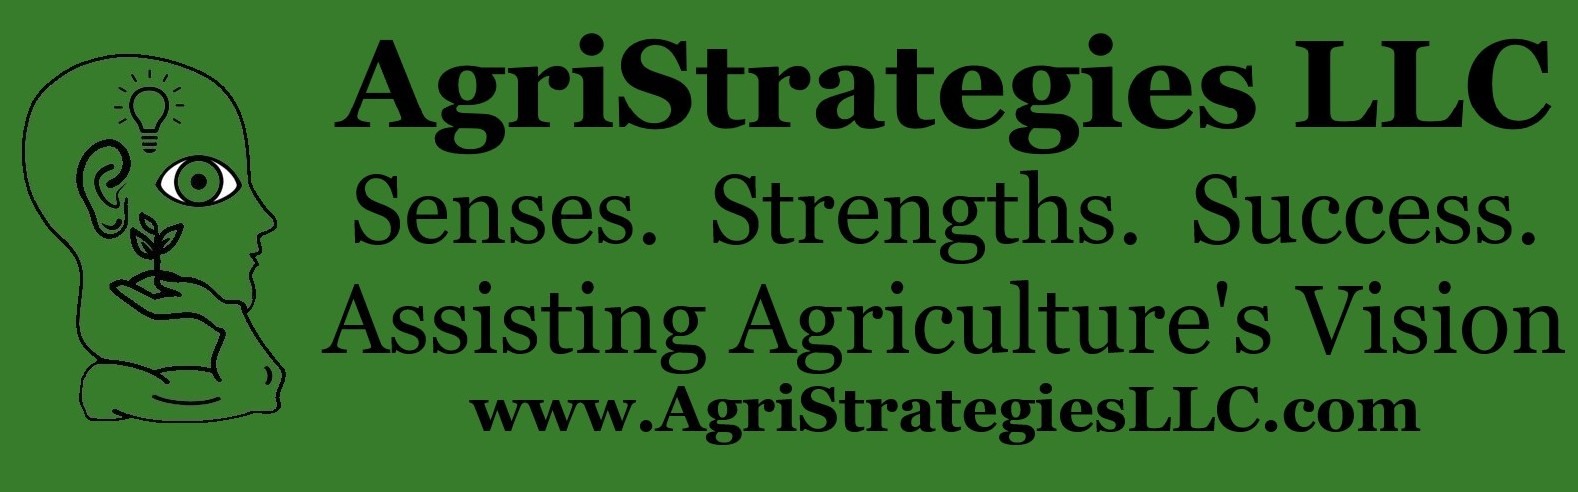 620339-AgriStrategies_LLC_Logo_horizontal.jpg